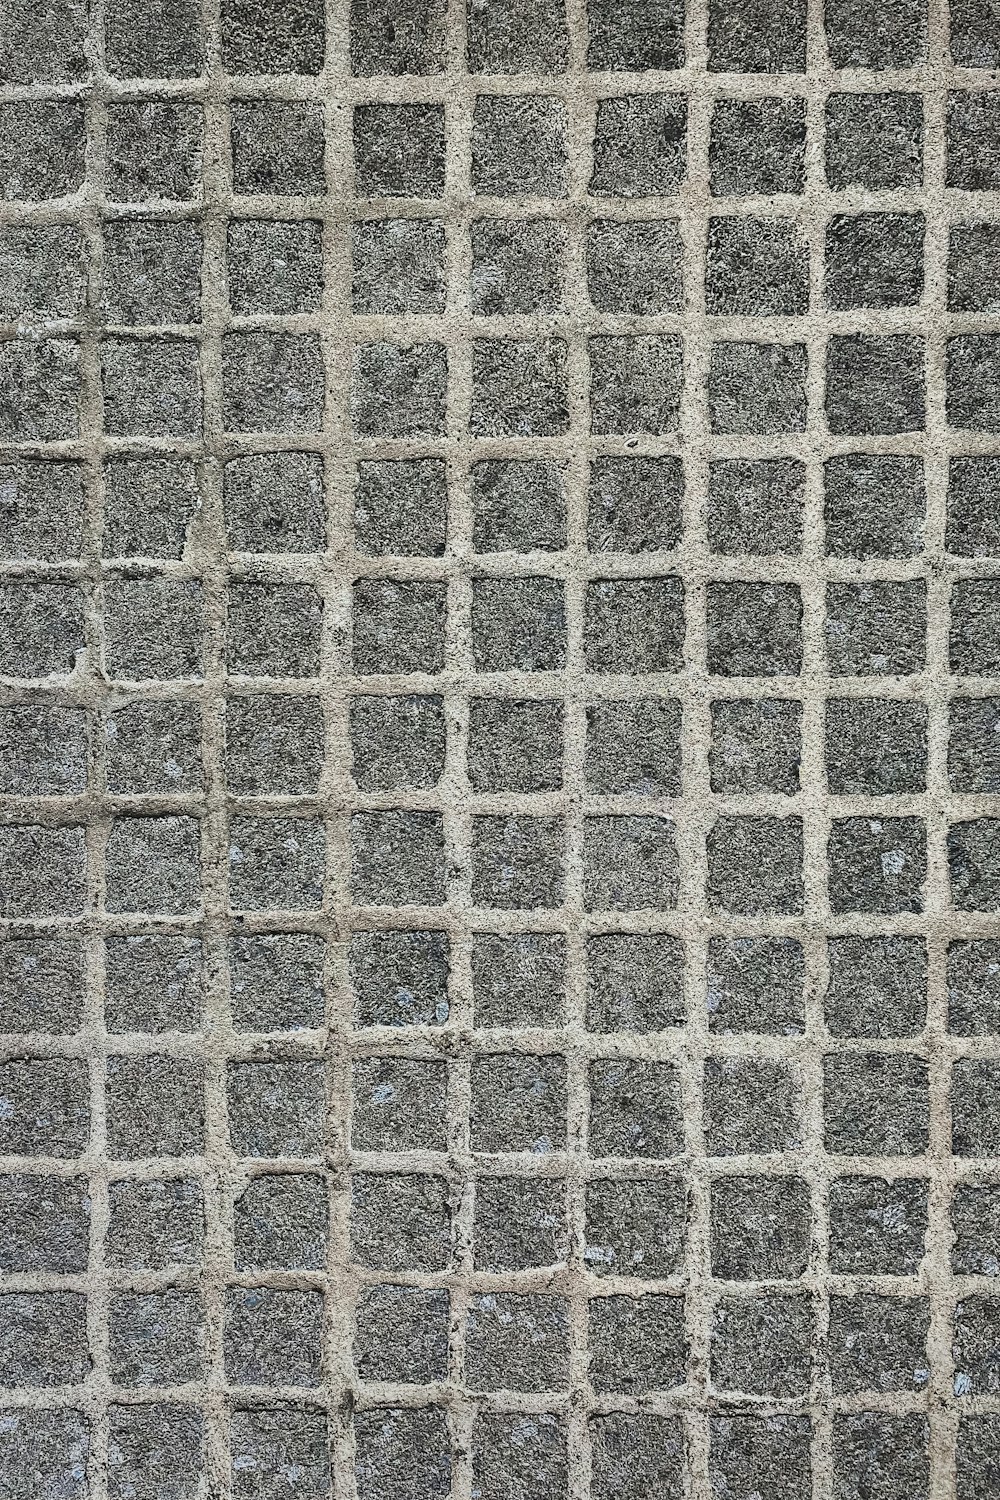 grey concrete pavement during daytime